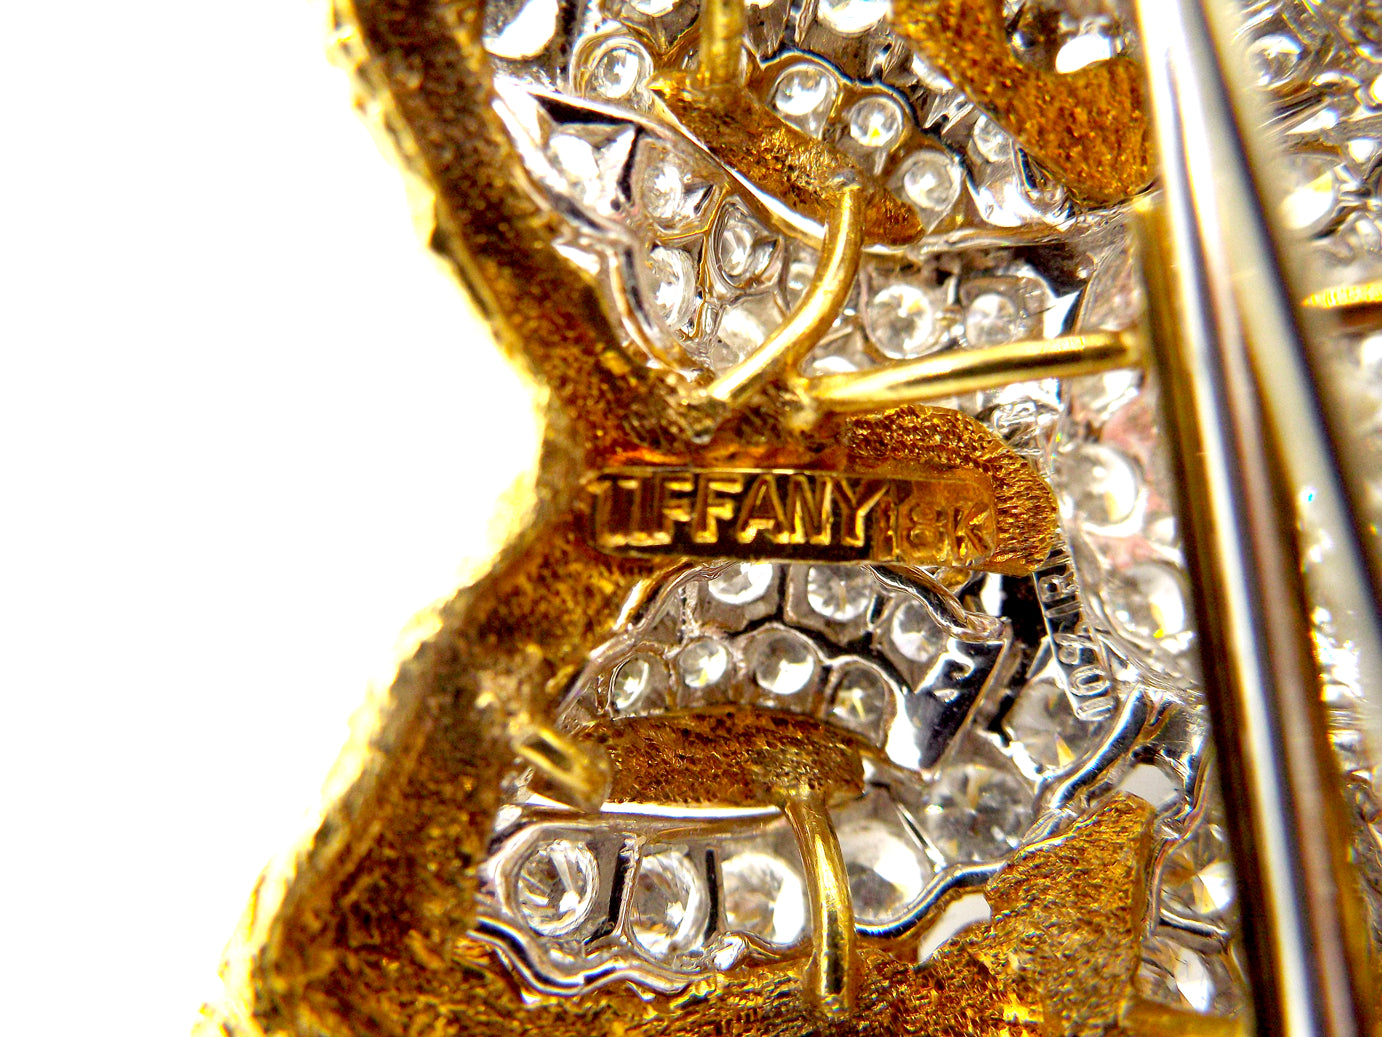 Tiffany & Co. 18K Yellow Gold Platinum Diamond Flower Pin Brooch